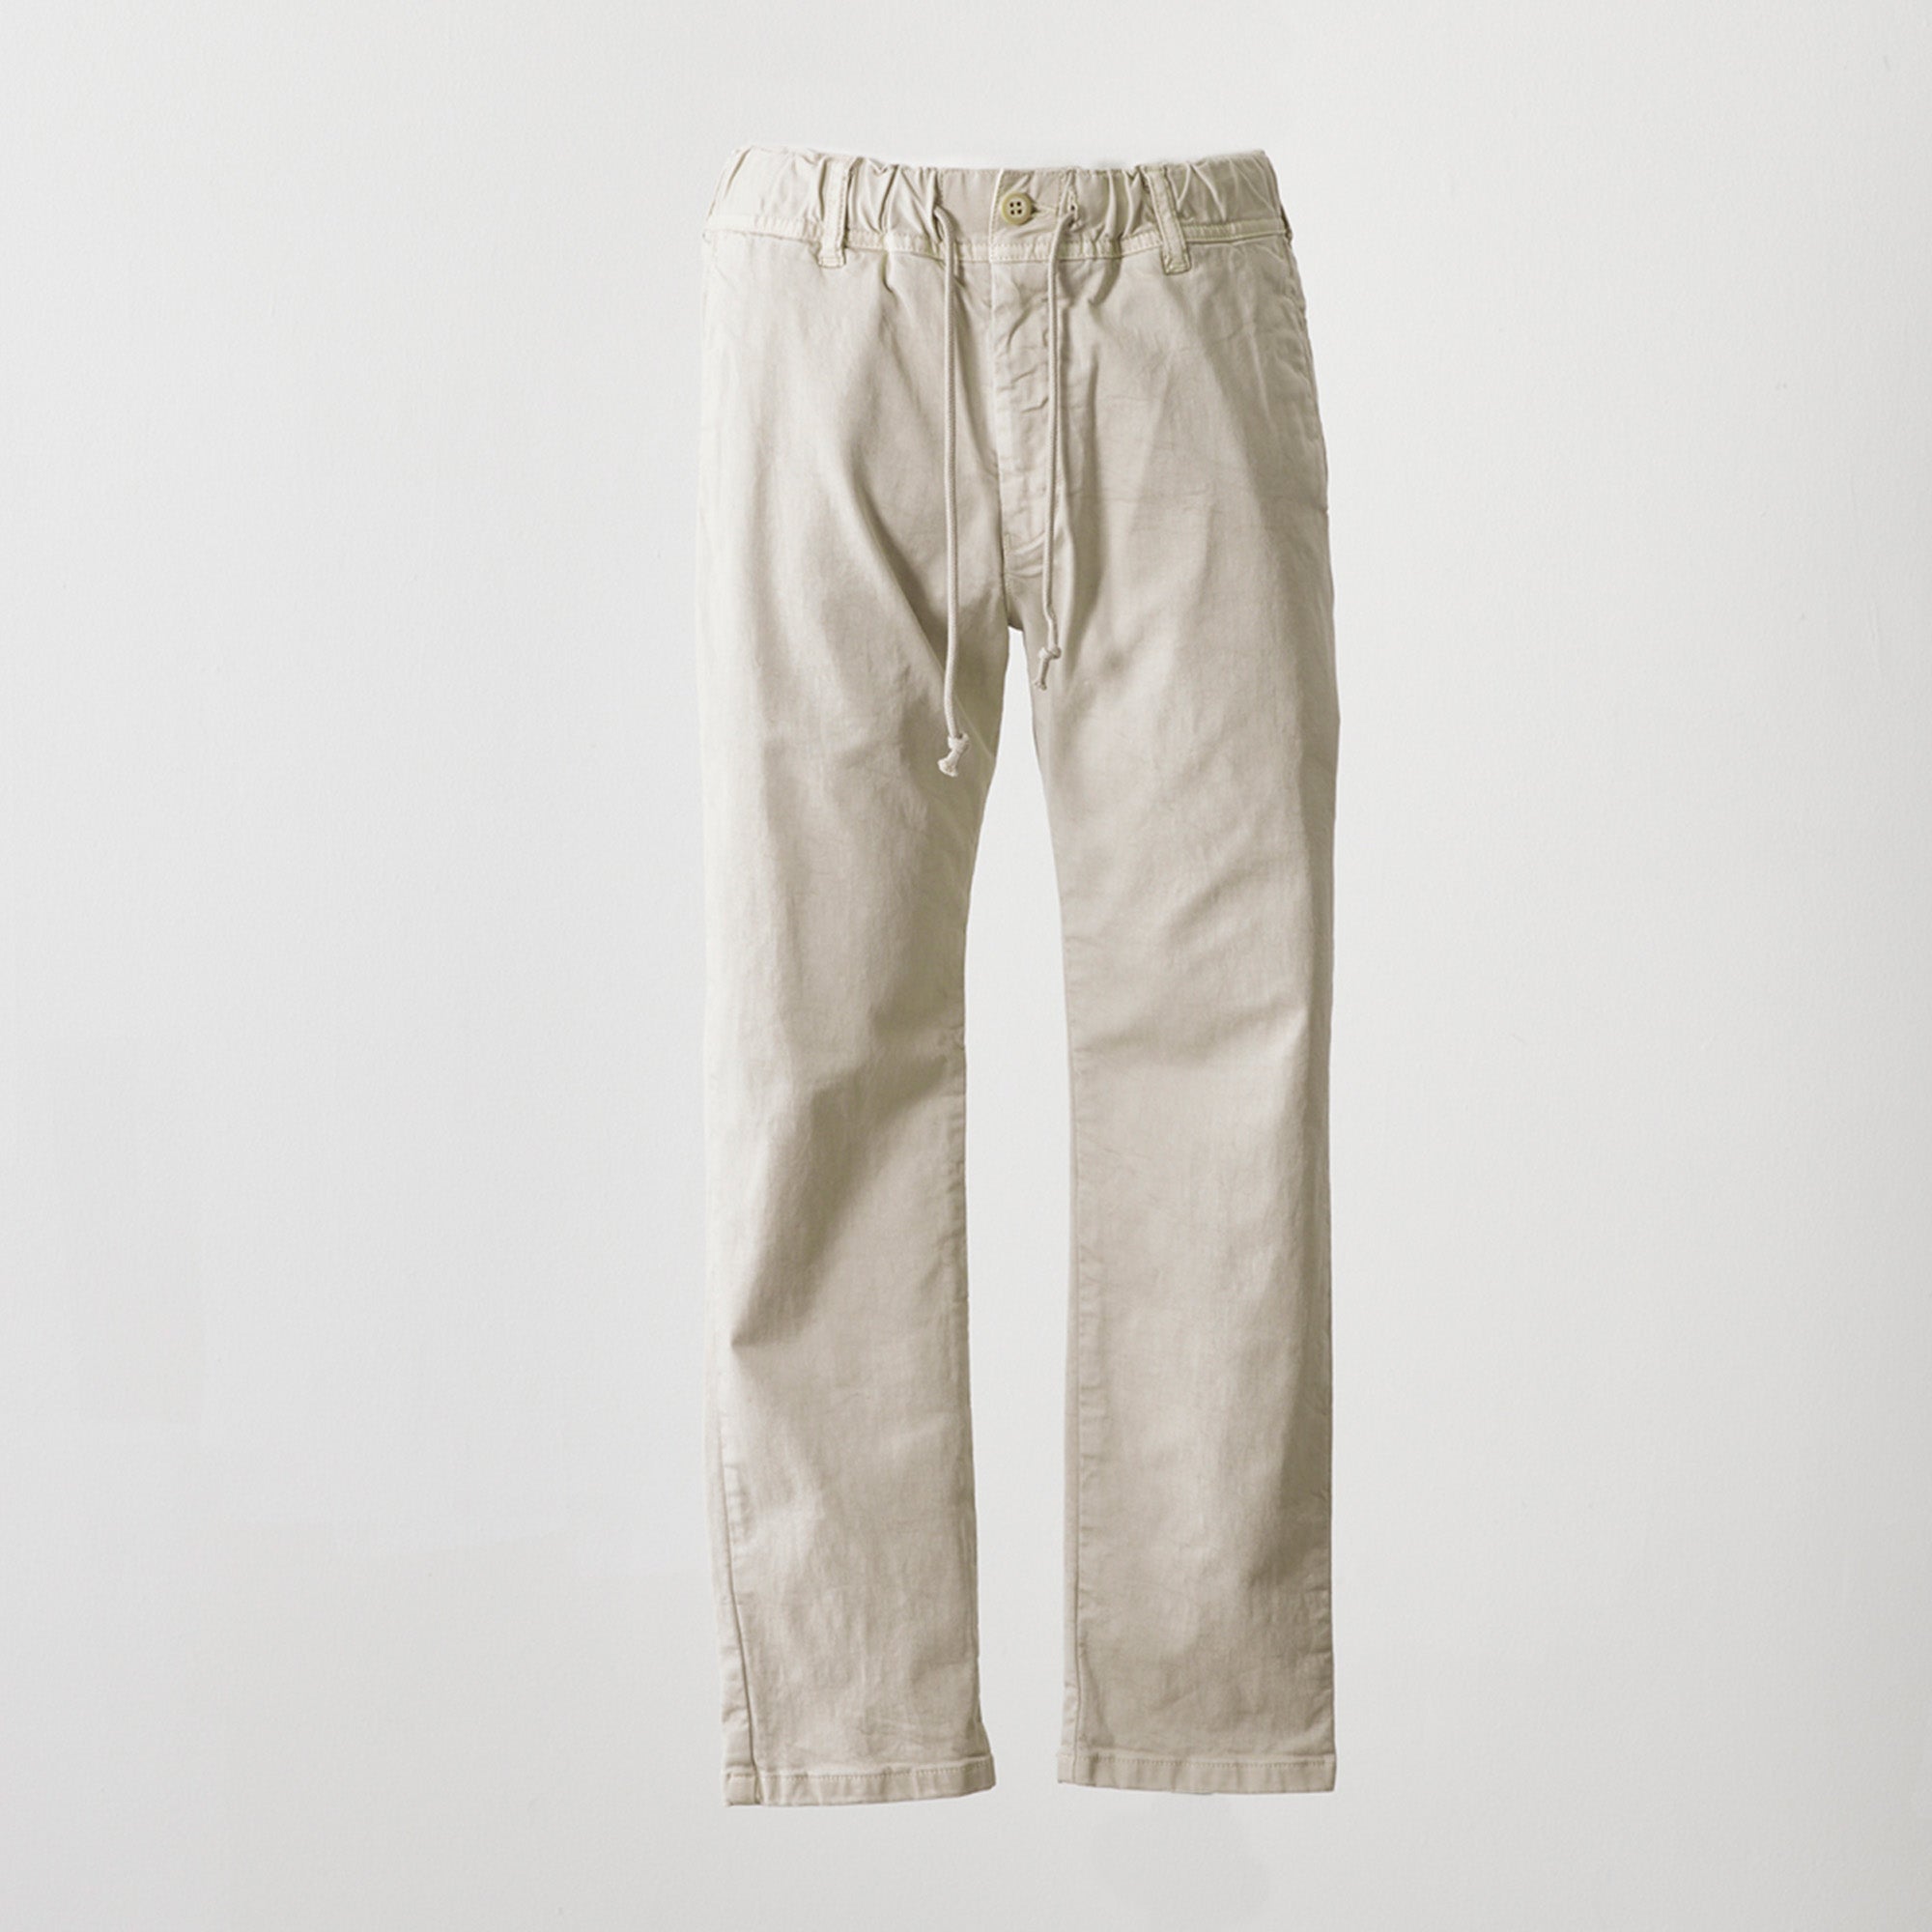 Tencel cotton easy pants